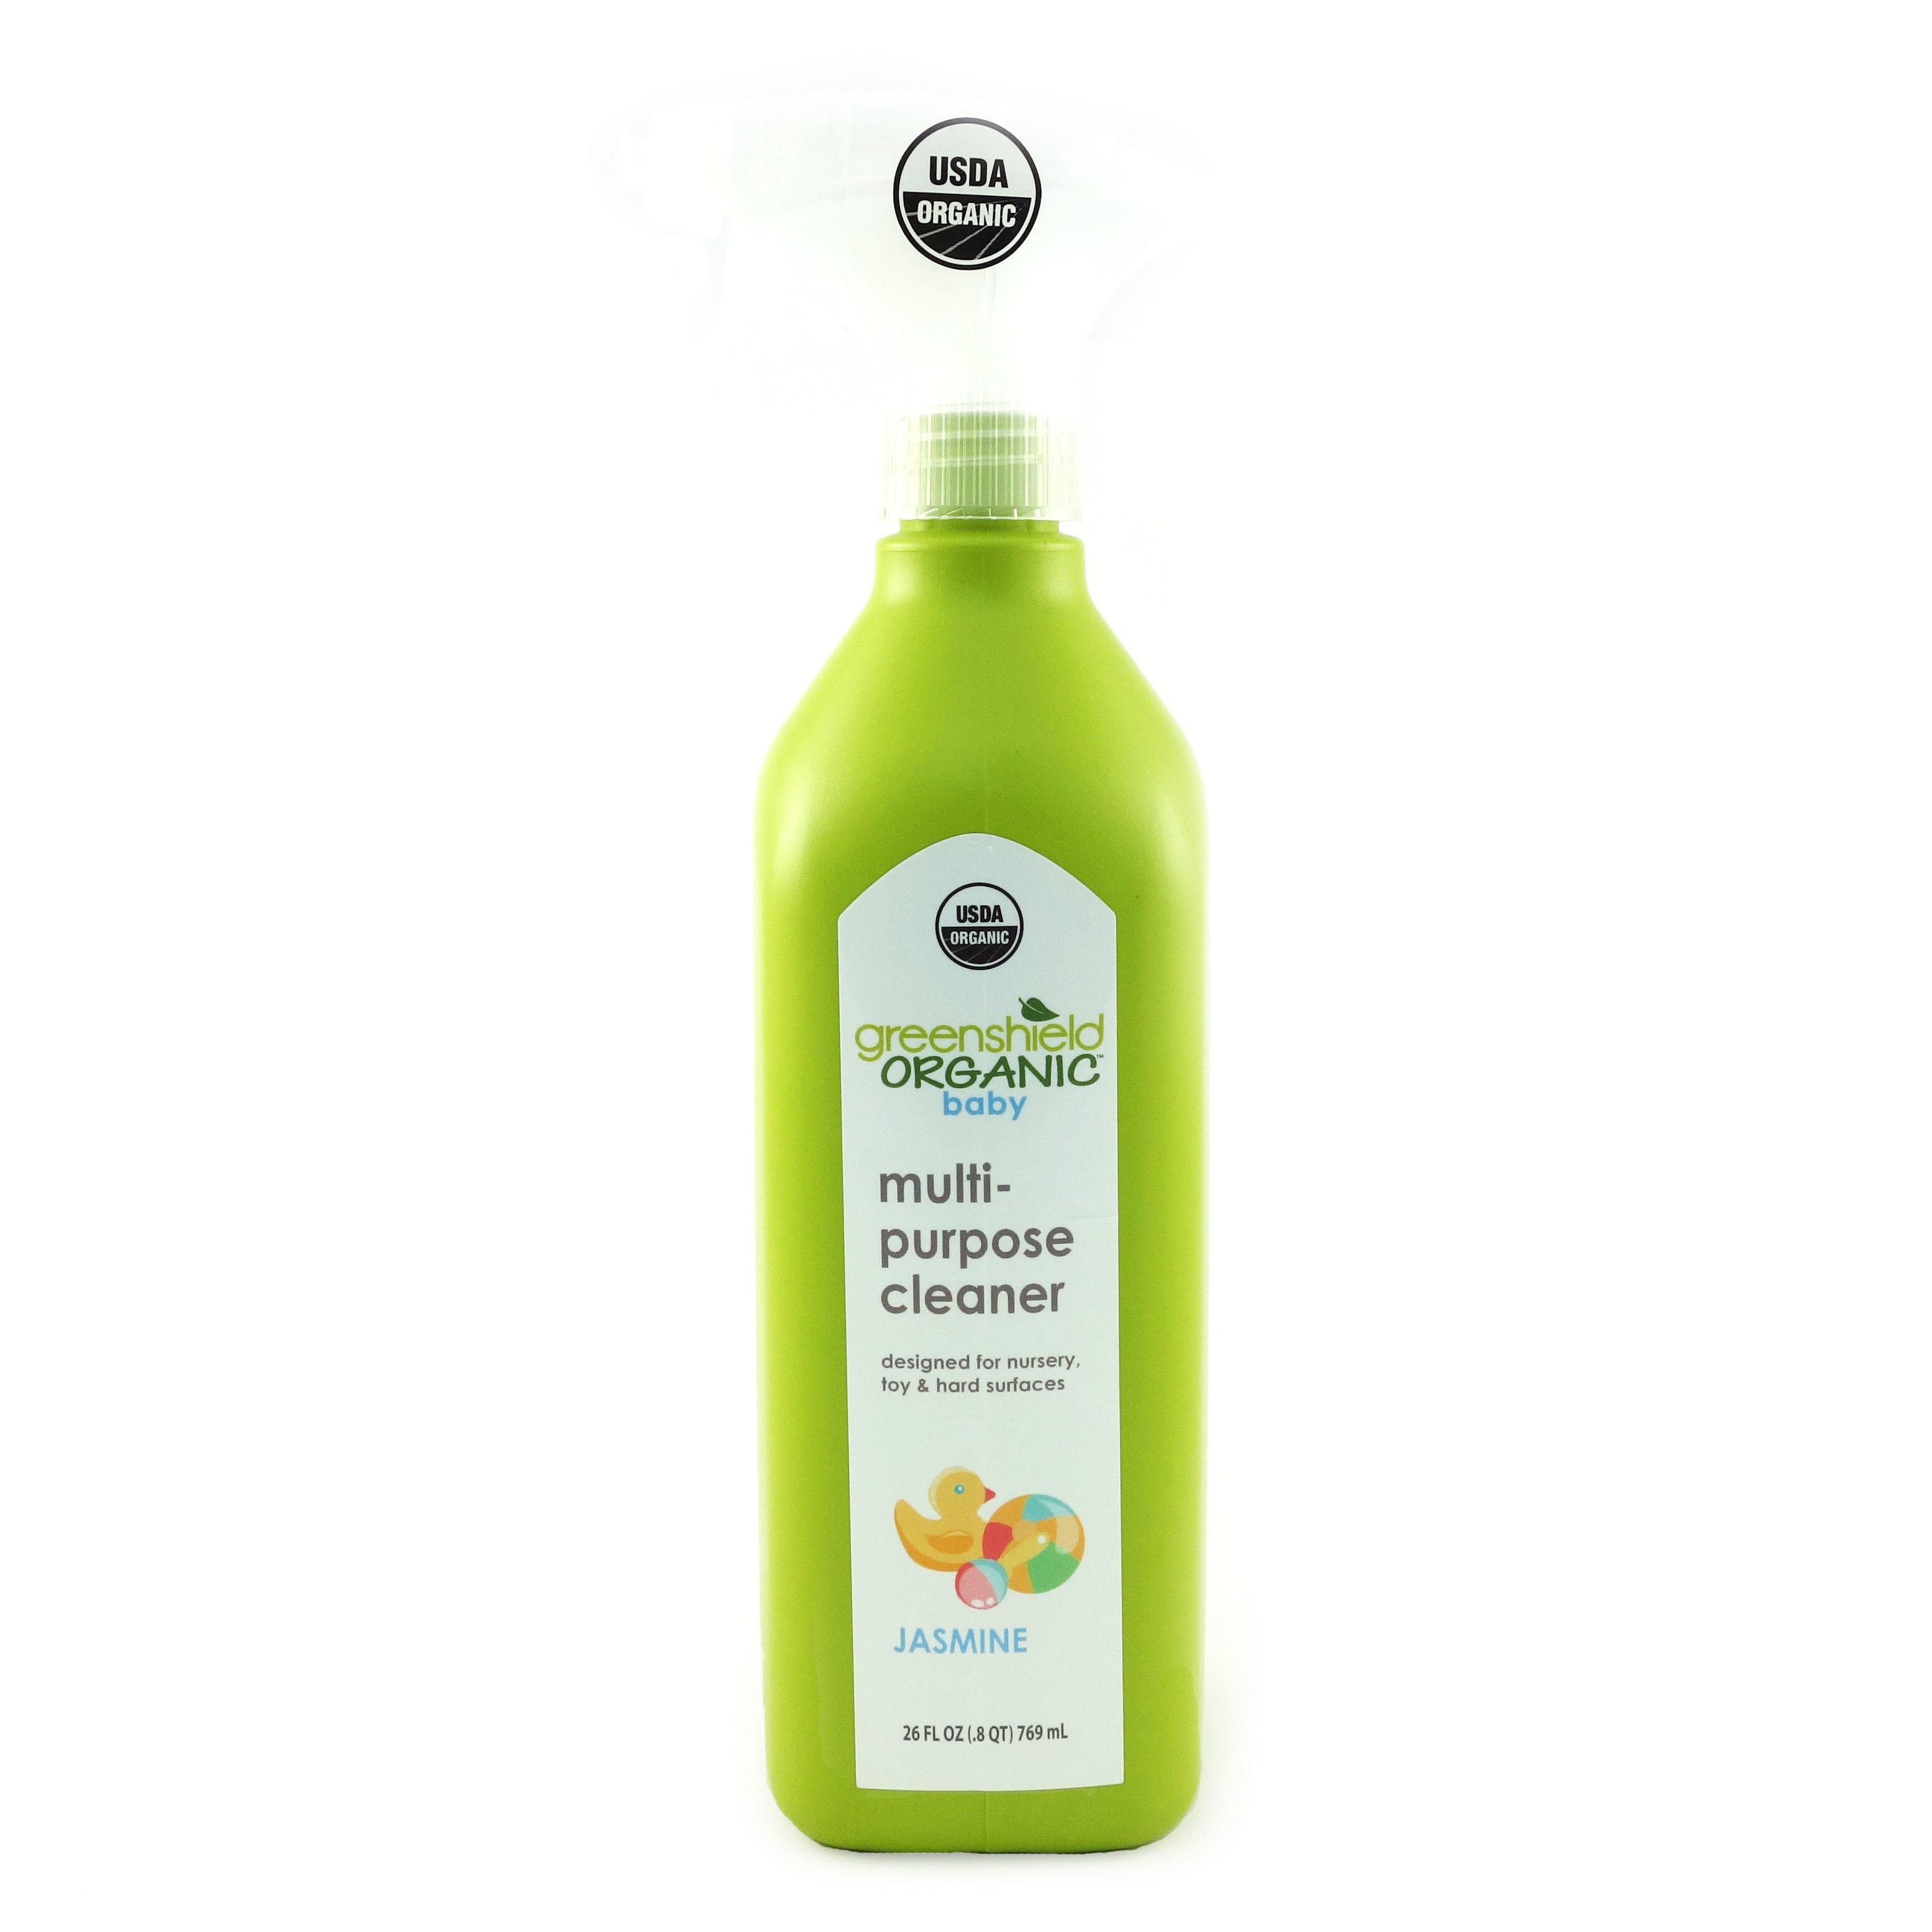 Greenshield Organic Baby Multi-Purpose Cleaner 769ml - US*